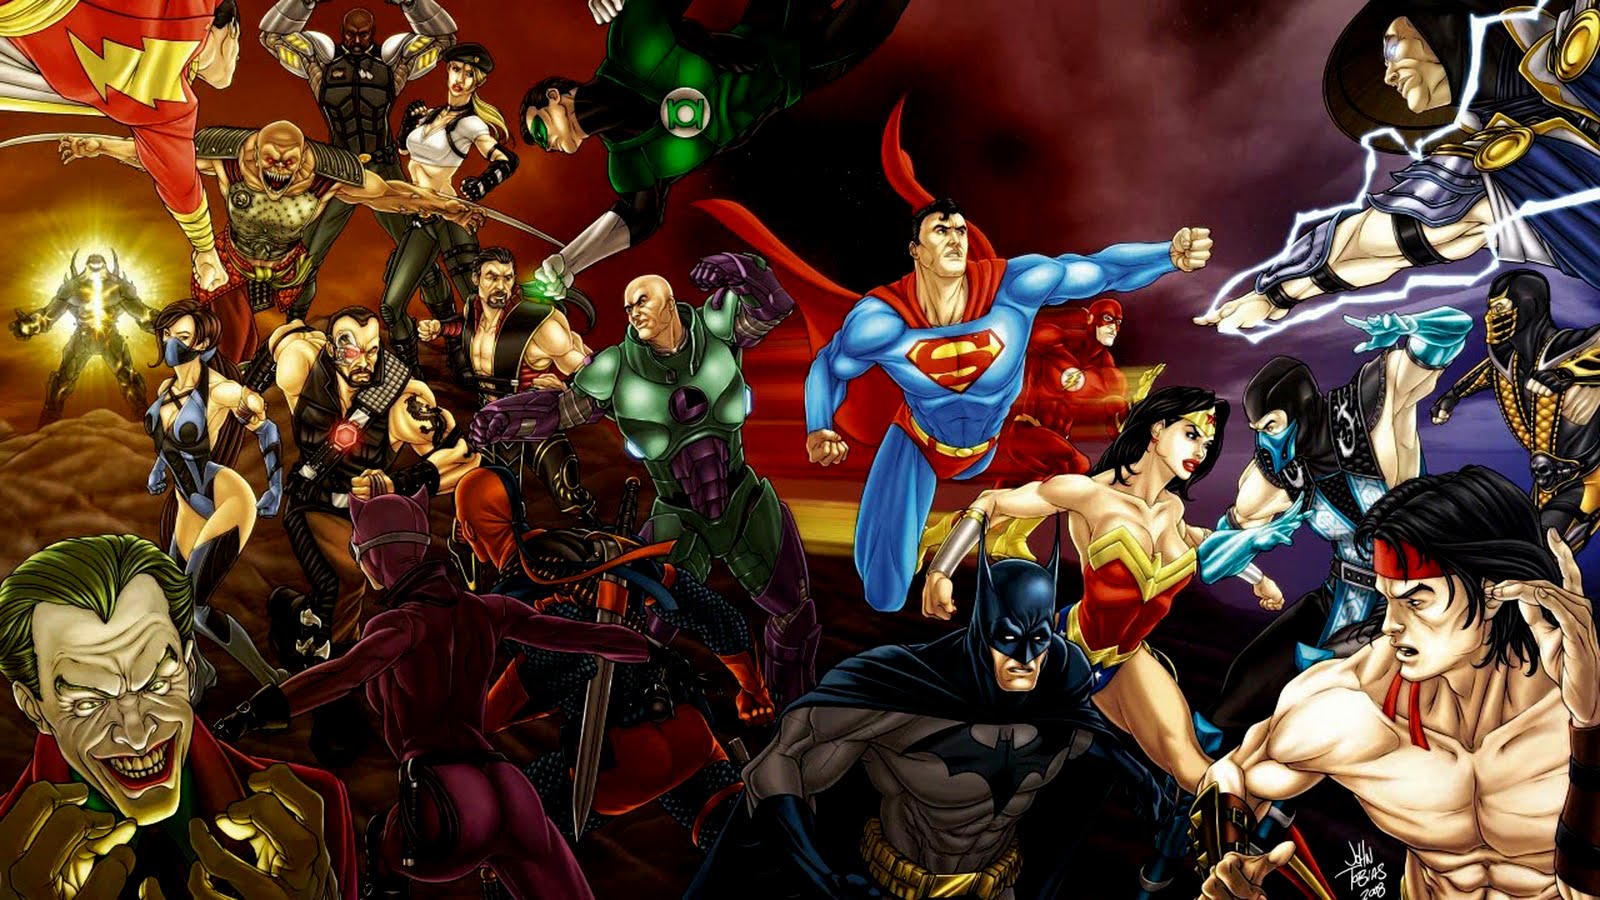 DC Comics Super Heroes HD Wallpaper wwwVvallpaperNetjpg